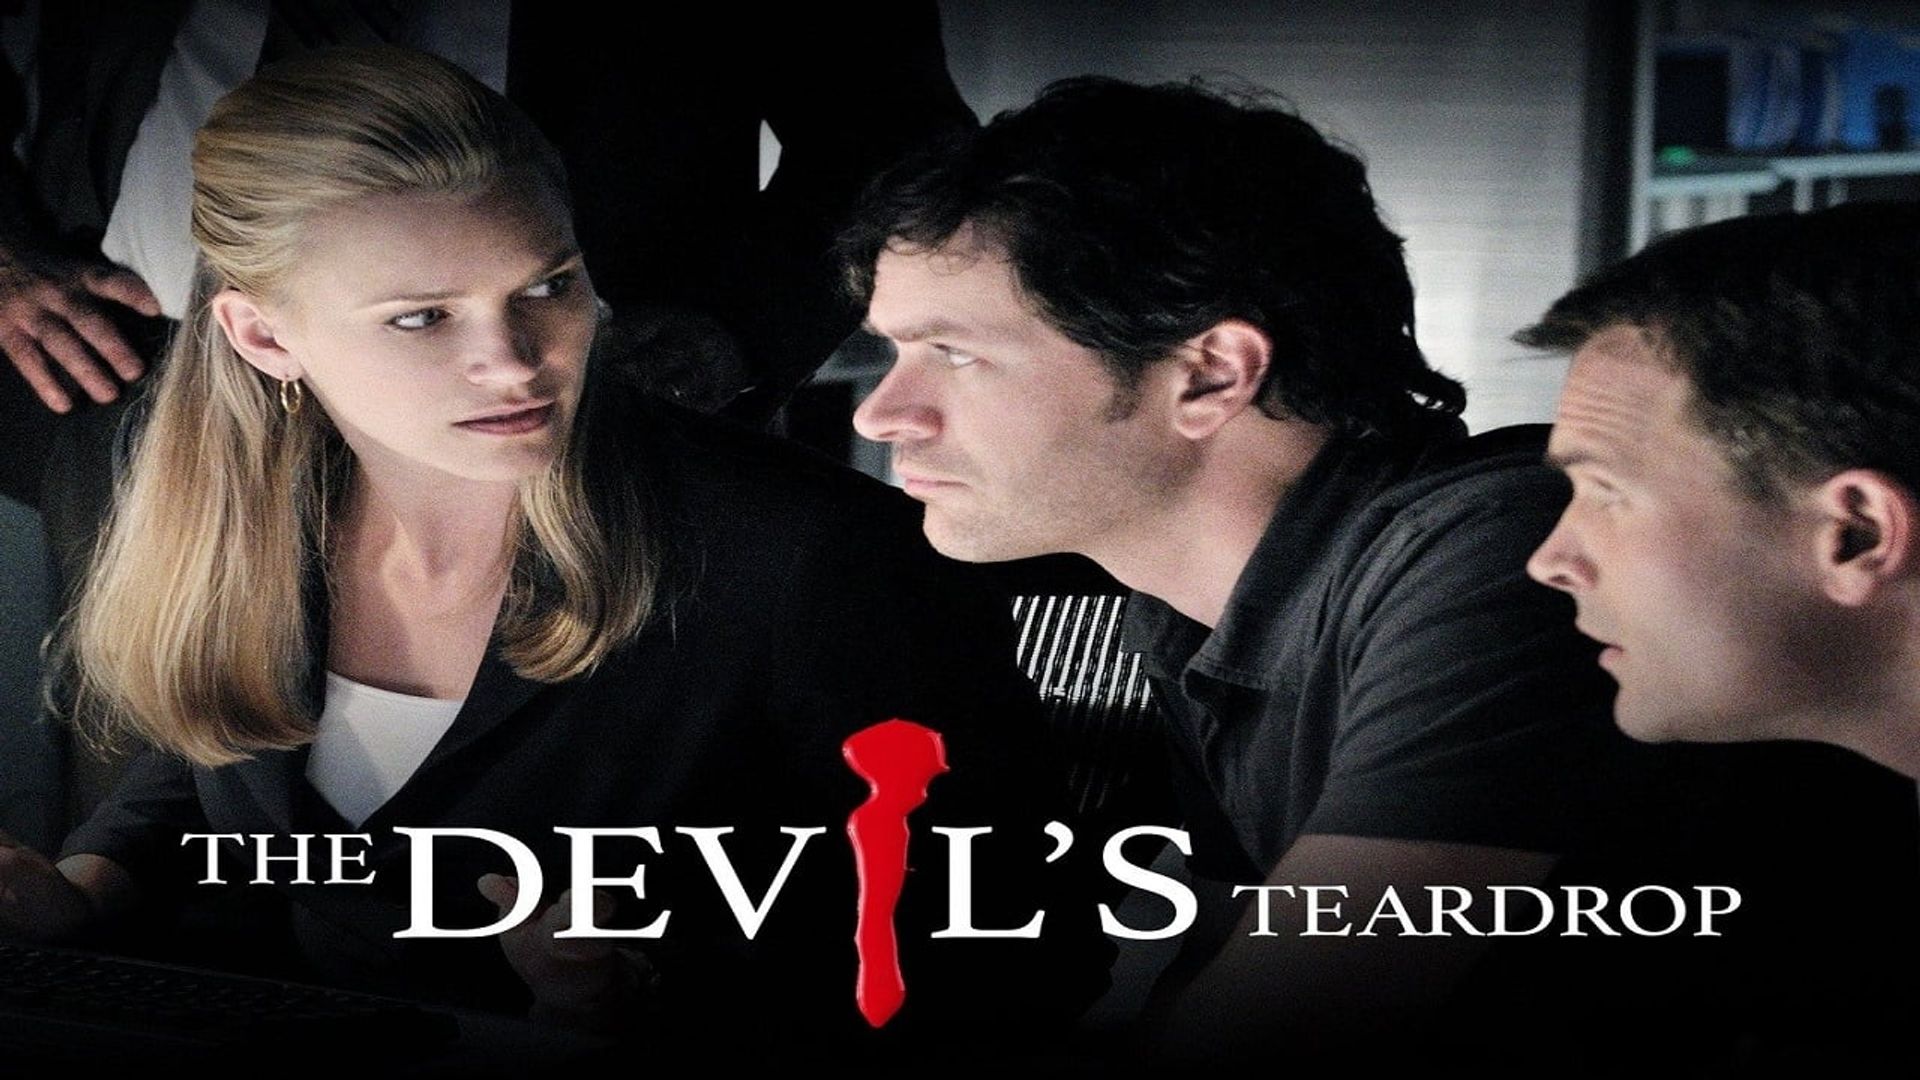 The Devil's Teardrop background